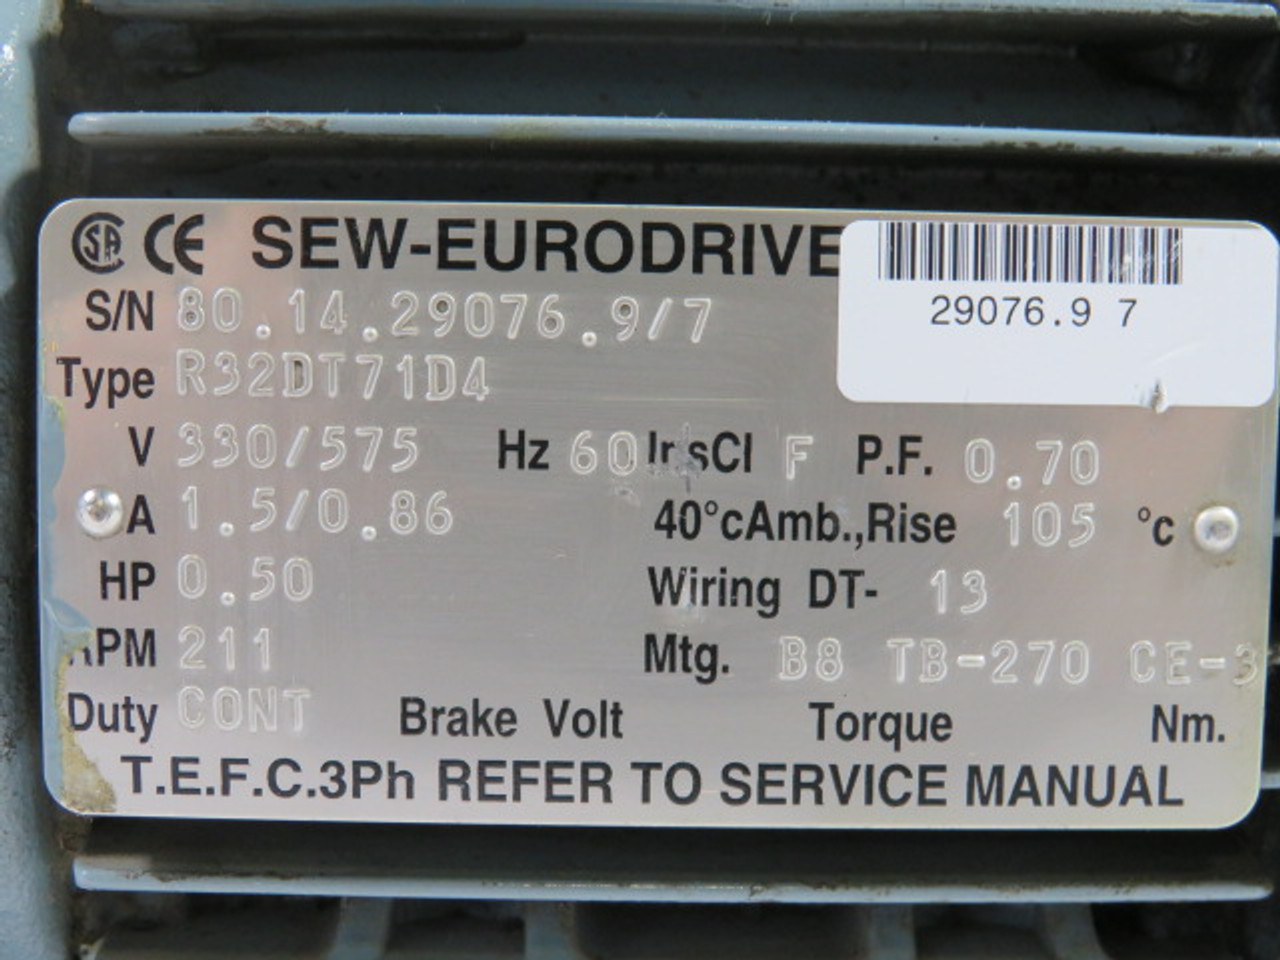 Sew-Eurodrive 0.5HP 211RPM 330/575V 71D TEFC 3Ph 1.50/0.86A 60Hz USED